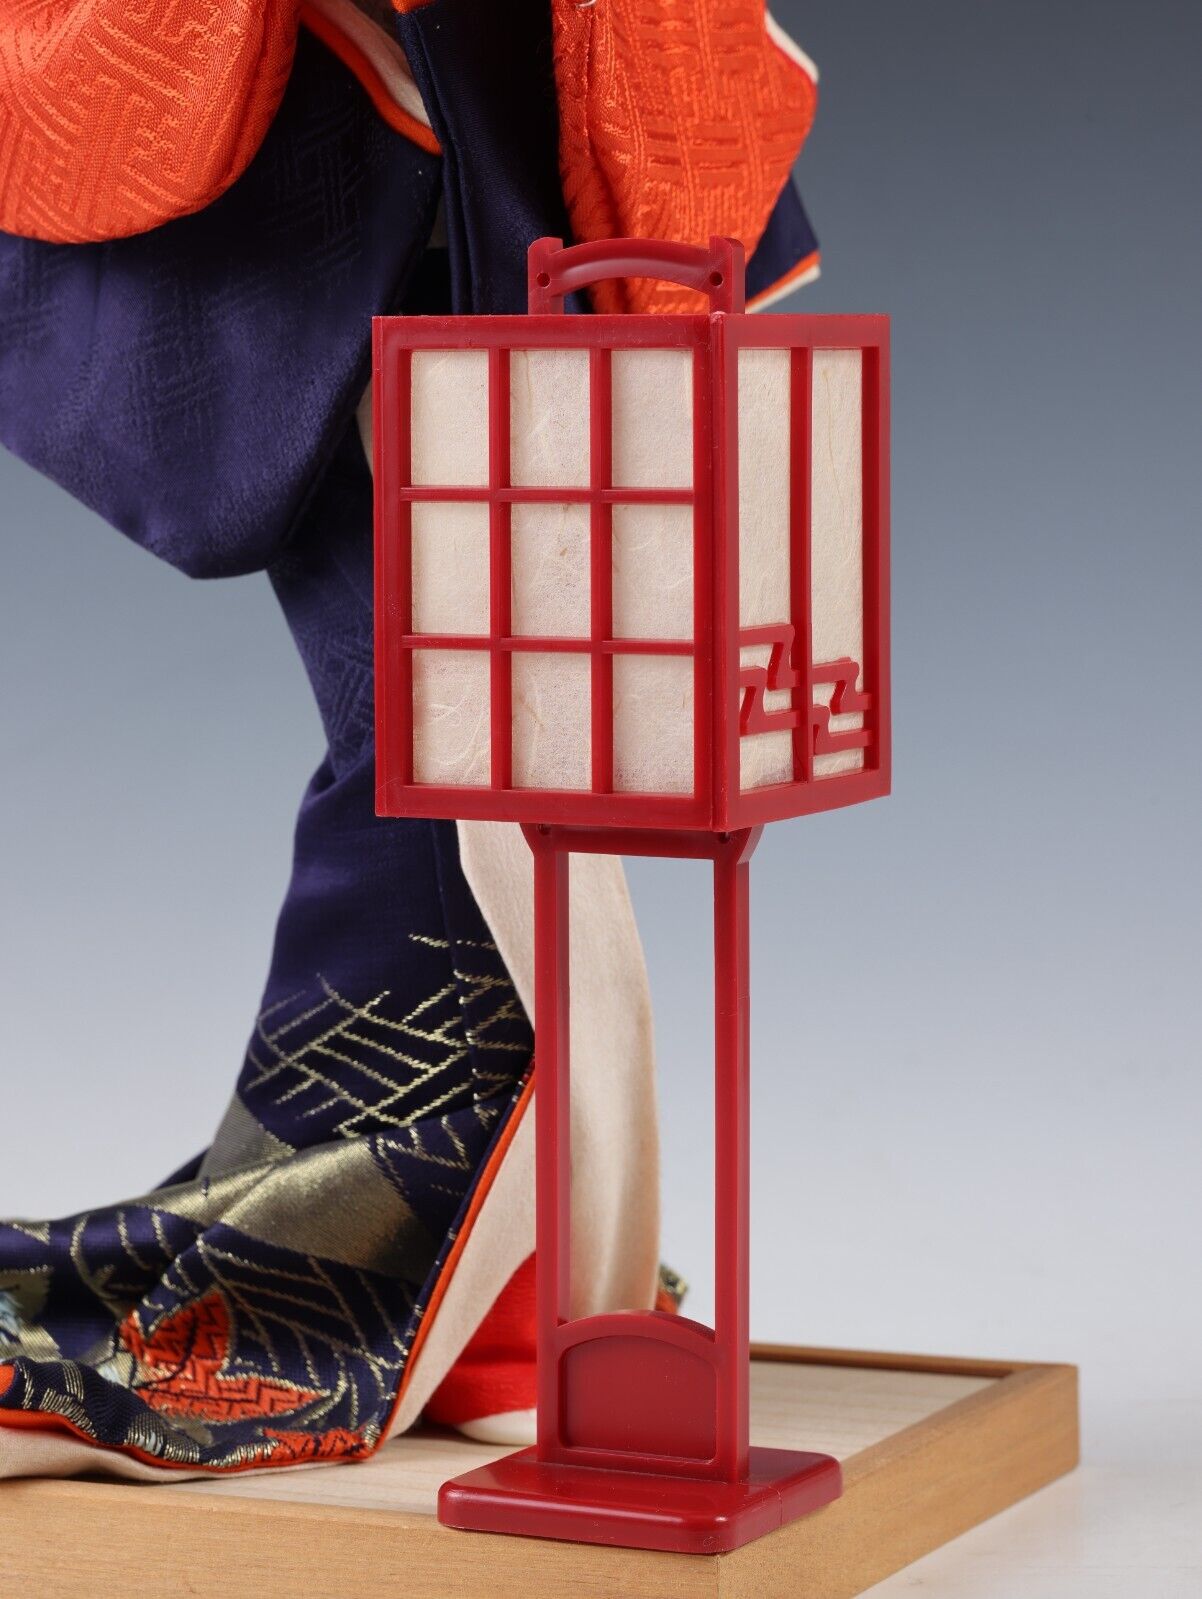 Japanese Collectible Vintage Geisha Doll in Traditional Kimono with Lantern.